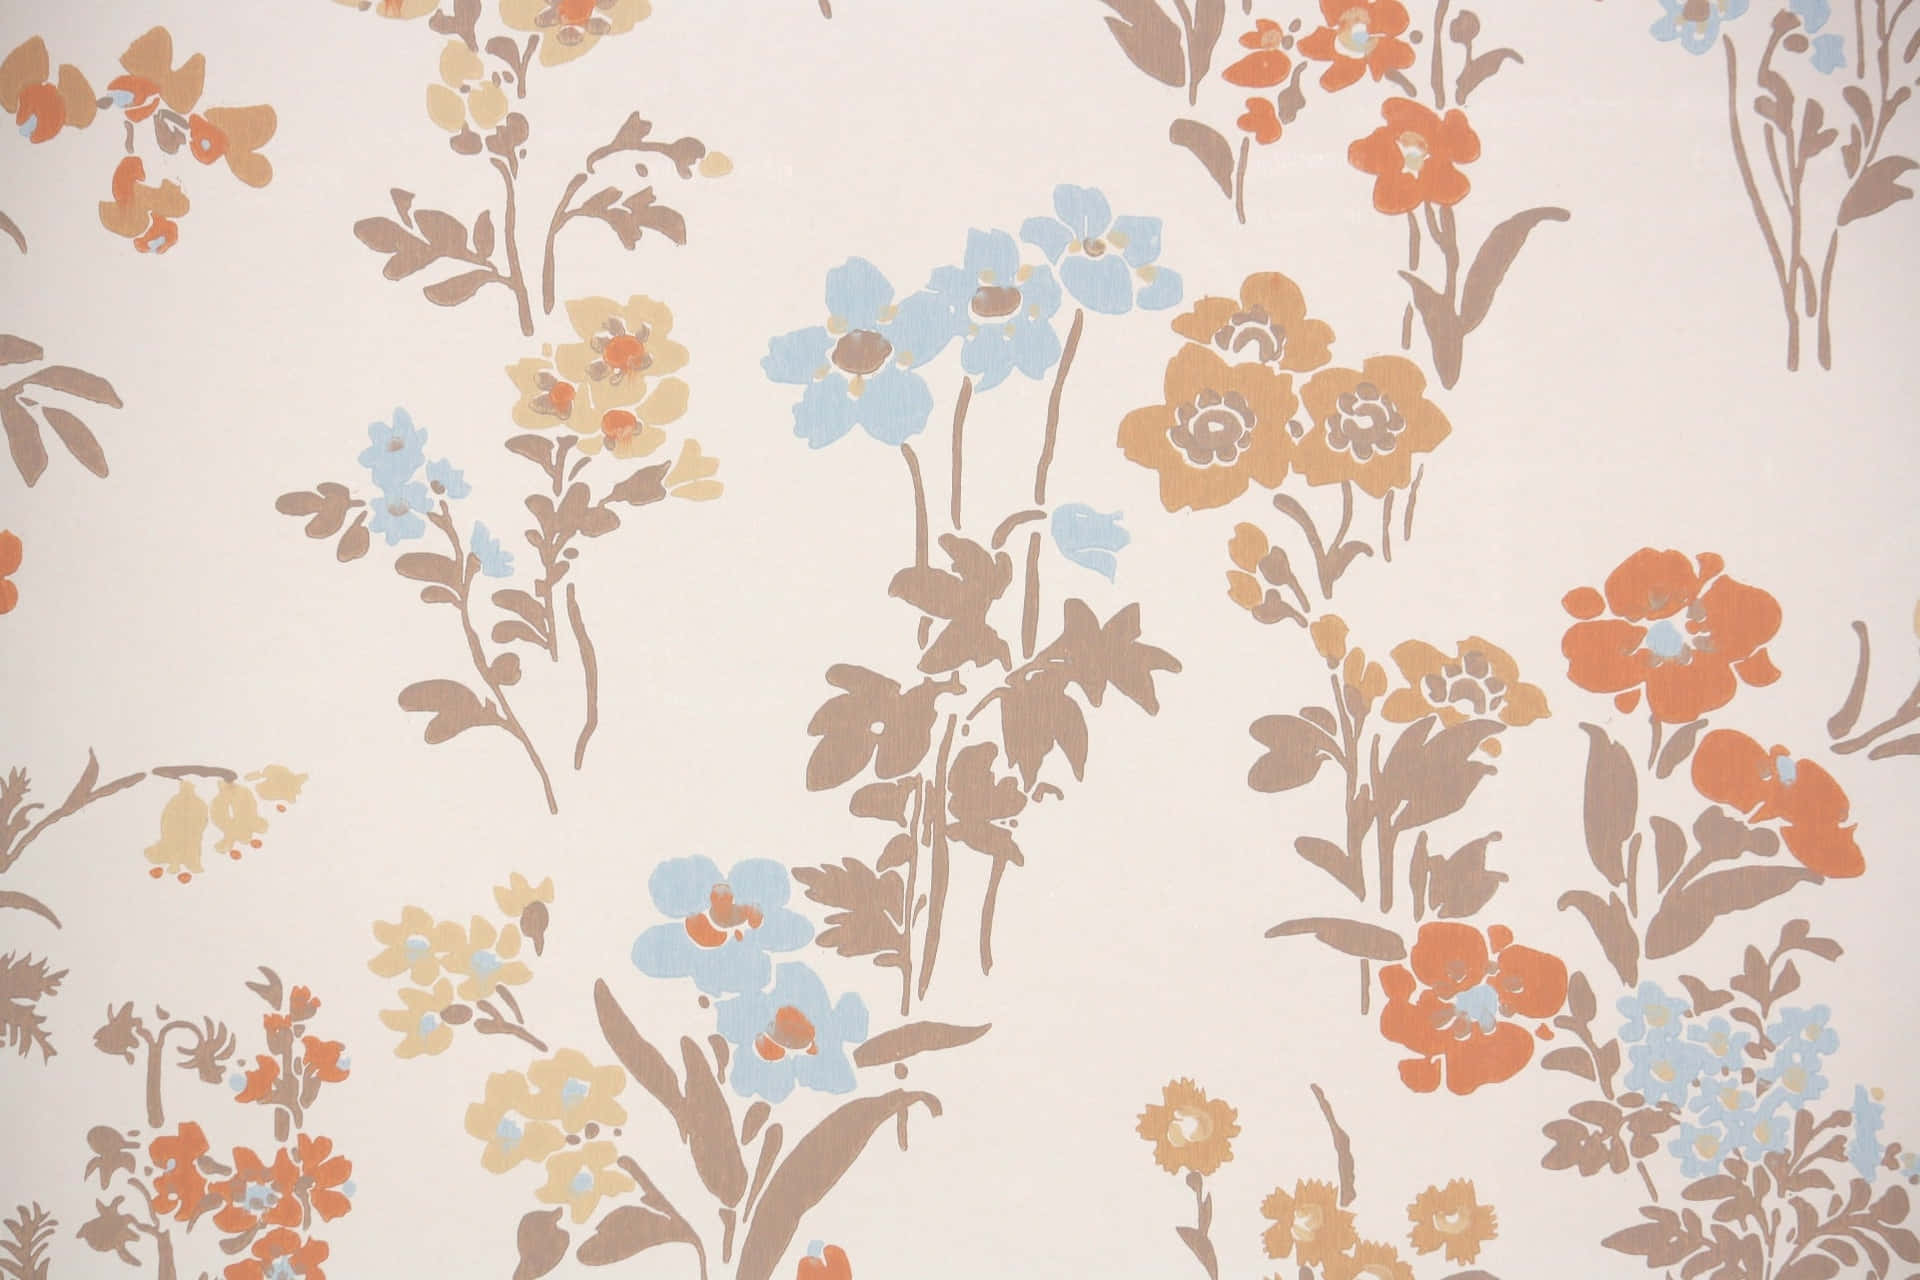 1970s floral wallpaper